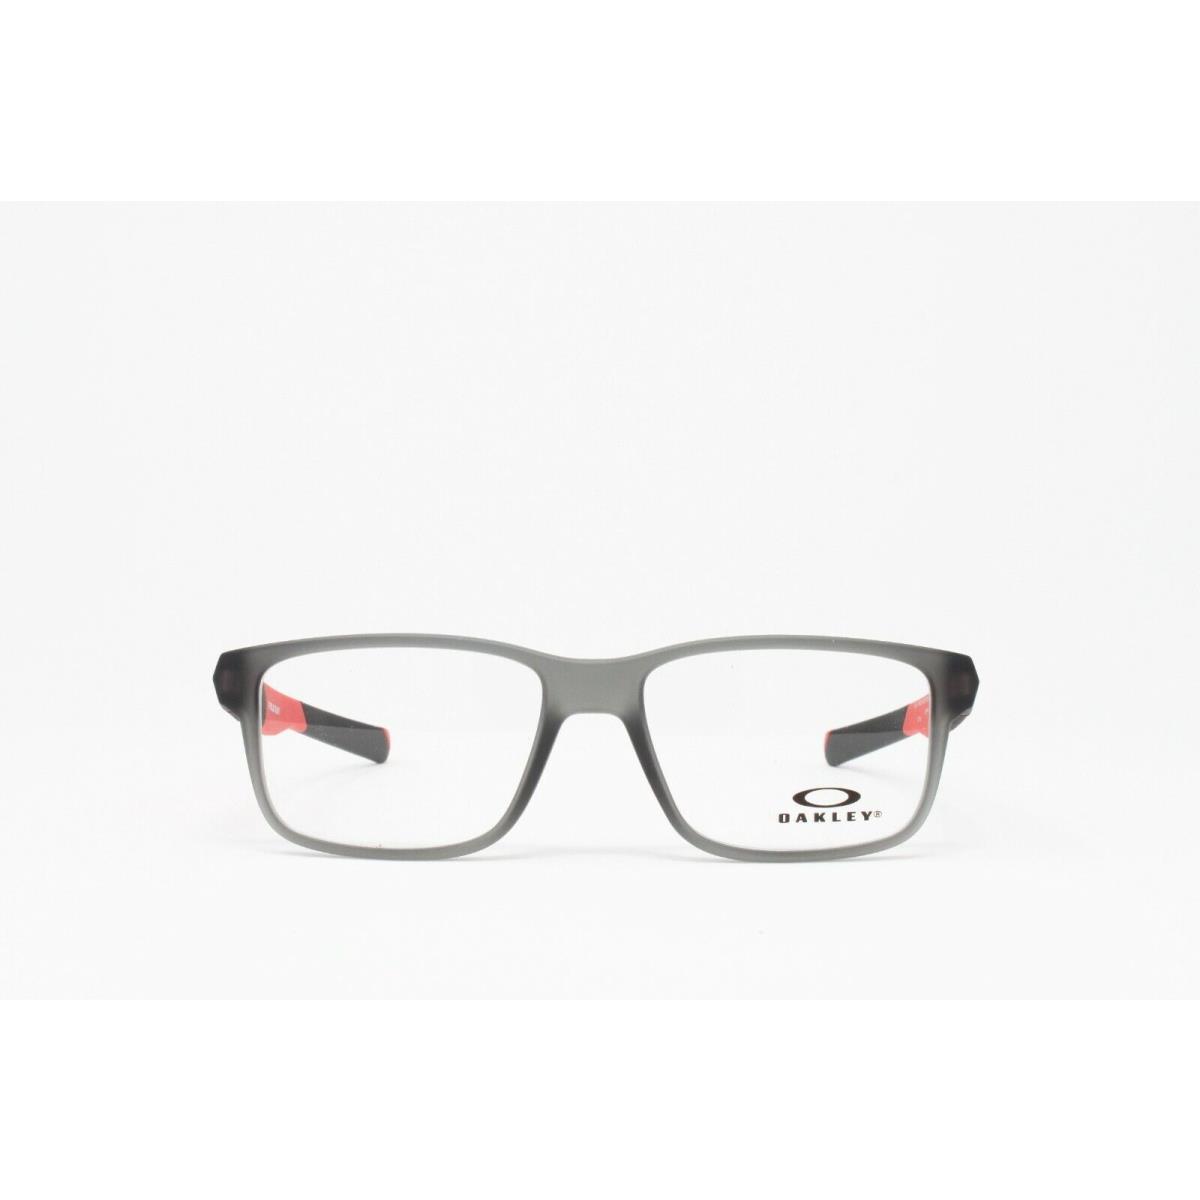 Oakley eyeglasses  - Gray Frame